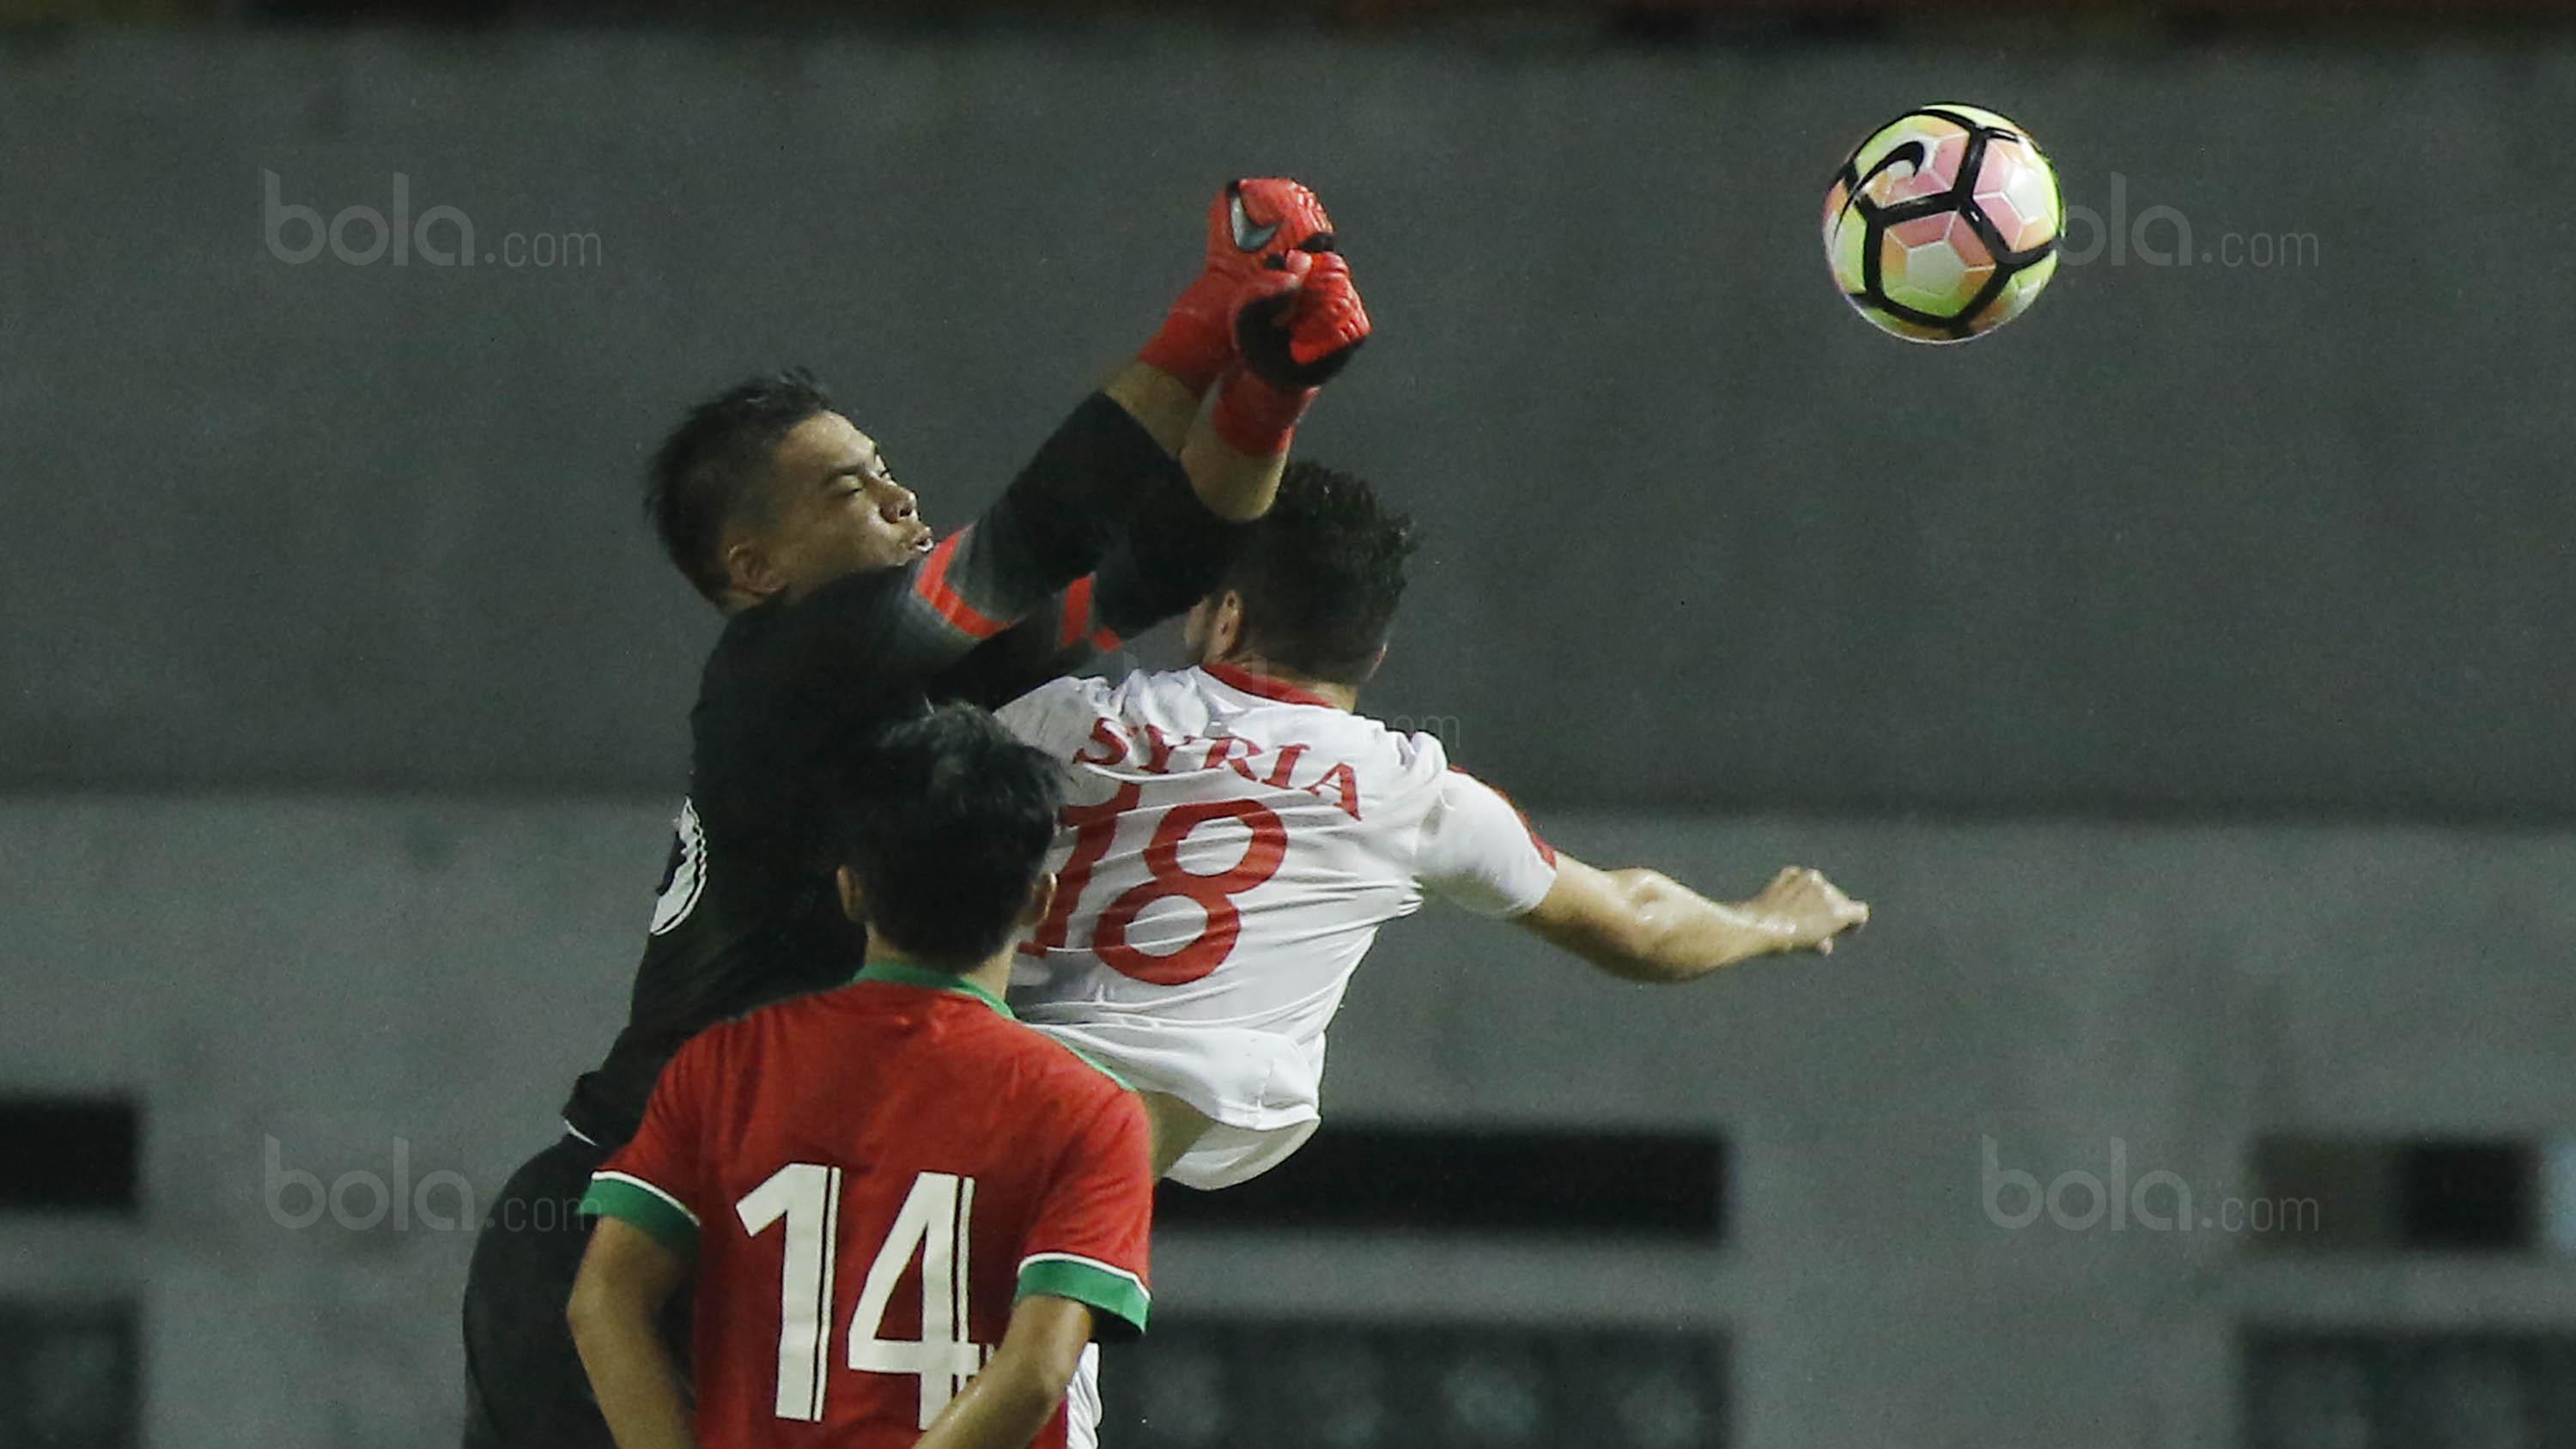 Kiper Indonesia, Andritany, meninju bola saat pertandingan melawan Suriah U-23 pada laga persahabatan di Stadion Wibawa Mukti, Cikarang, Sabtu (18/11/2017). Indonesia kalah 0-1 dari Suriah U-23. (Bola.com/ M Iqbal Ichsan)